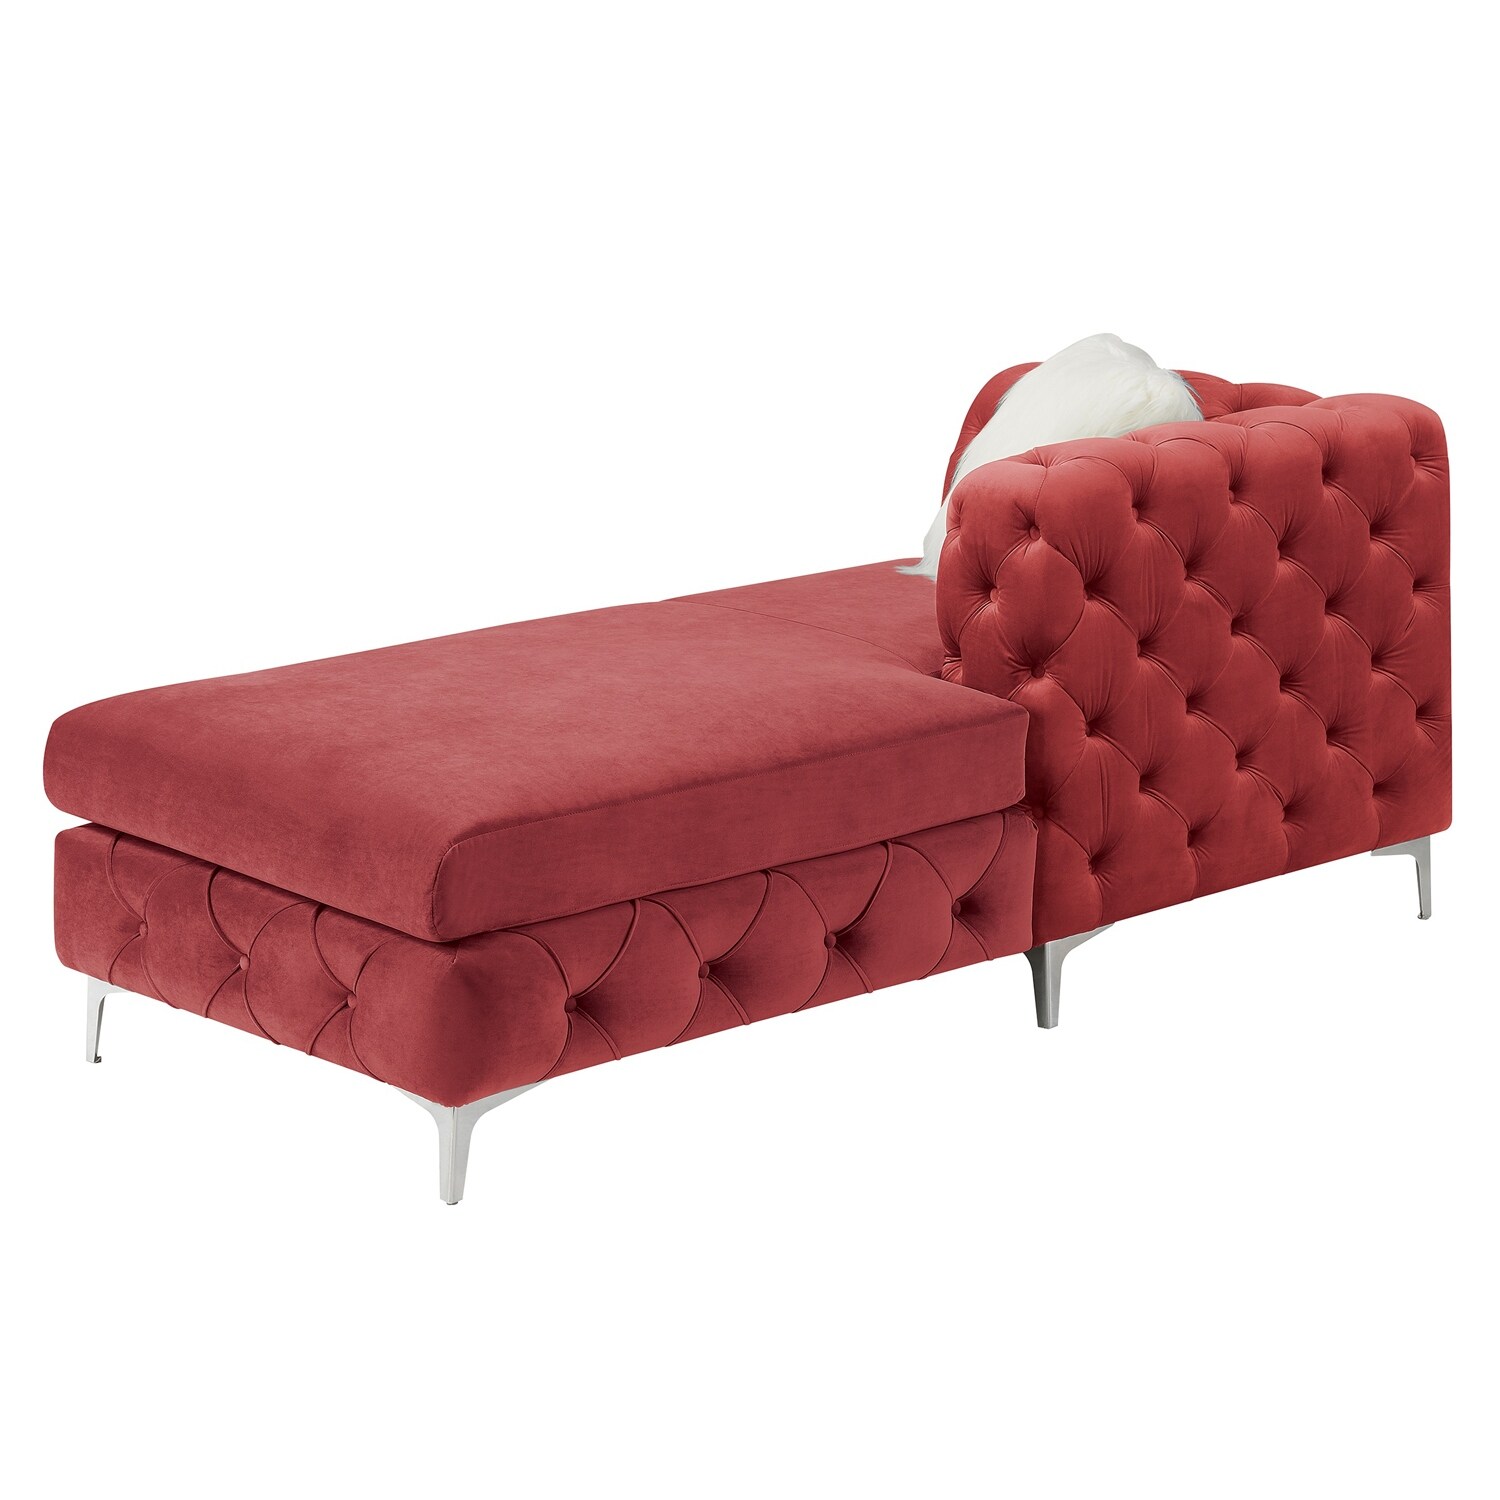 Avana Yoga Chaise Lounge Chair, Red 